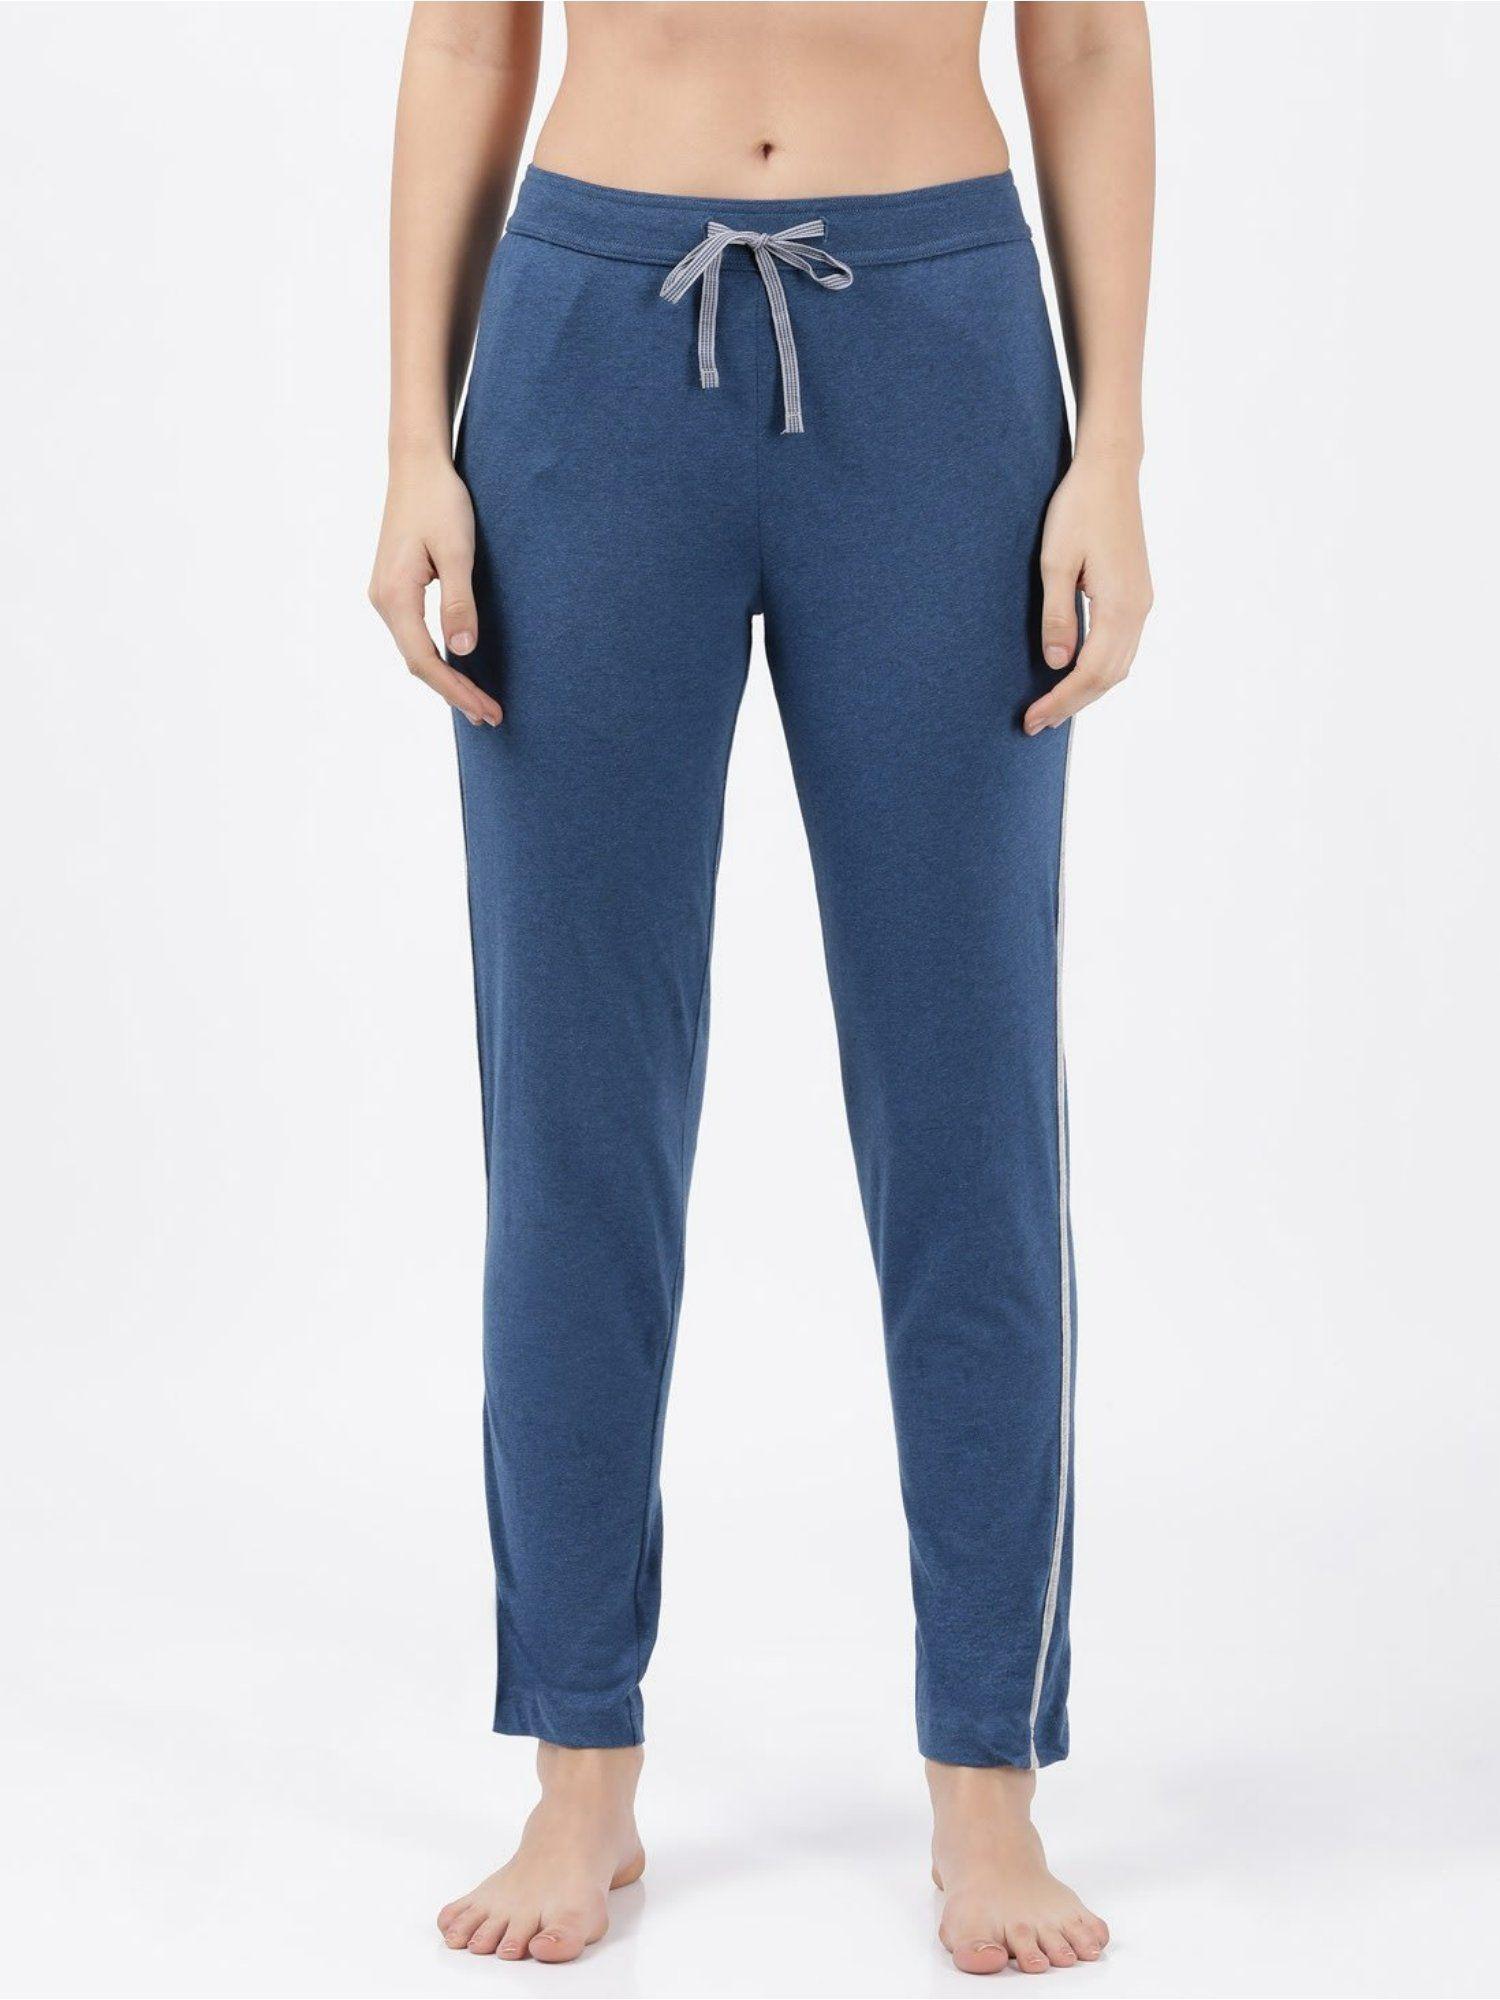 1305-women's-cotton-rich-trackpants-with-convenient-side-pockets-blue